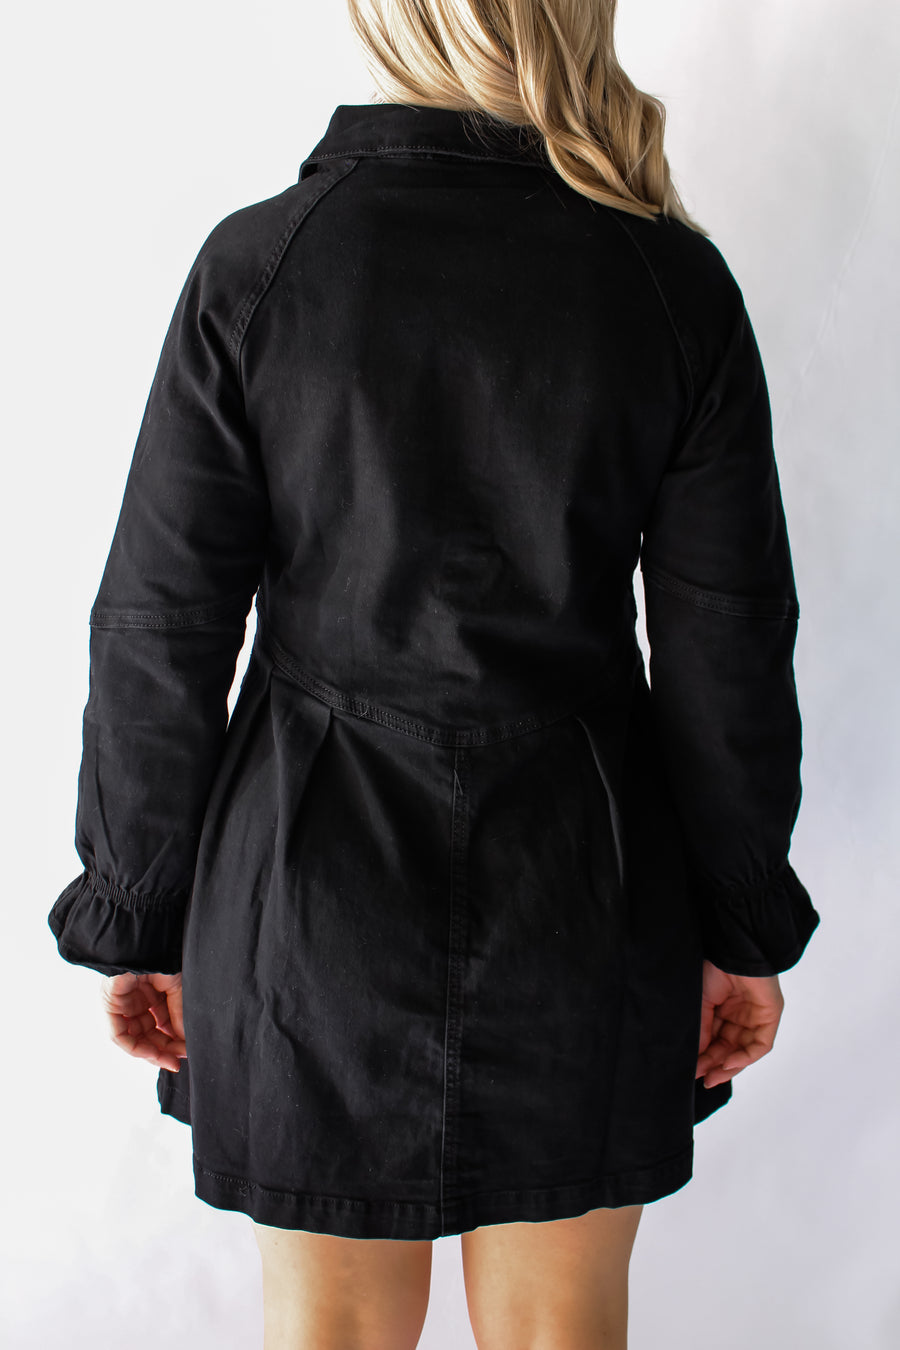 ELSIE DENIM DRESS - BLACK (STRETCHY)